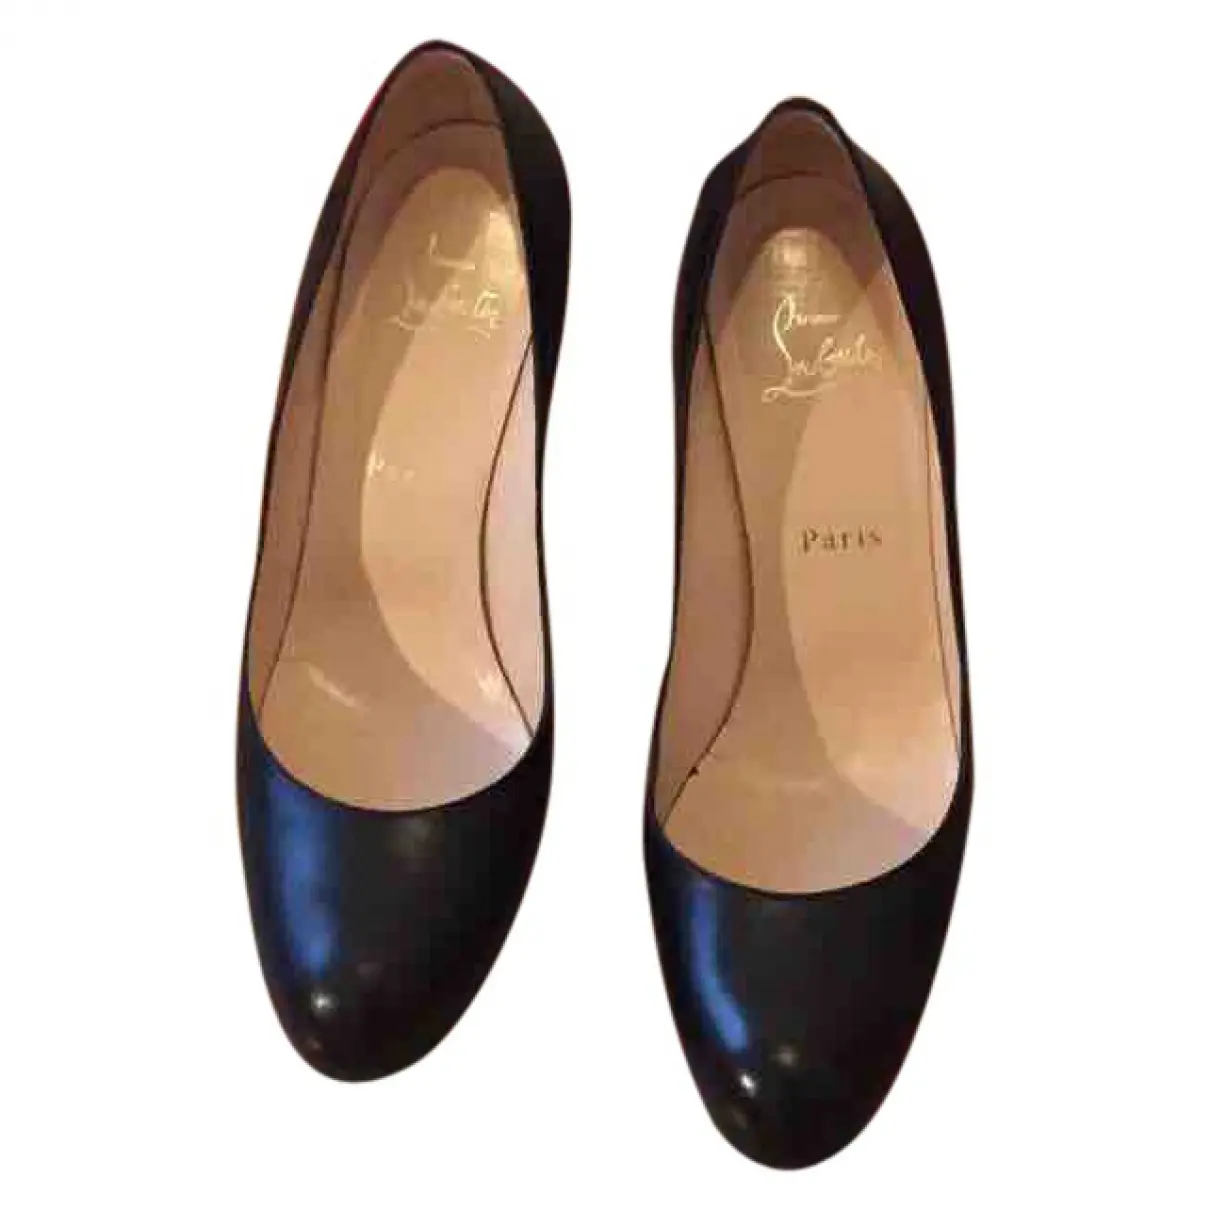 SImple pump leather heels Christian Louboutin